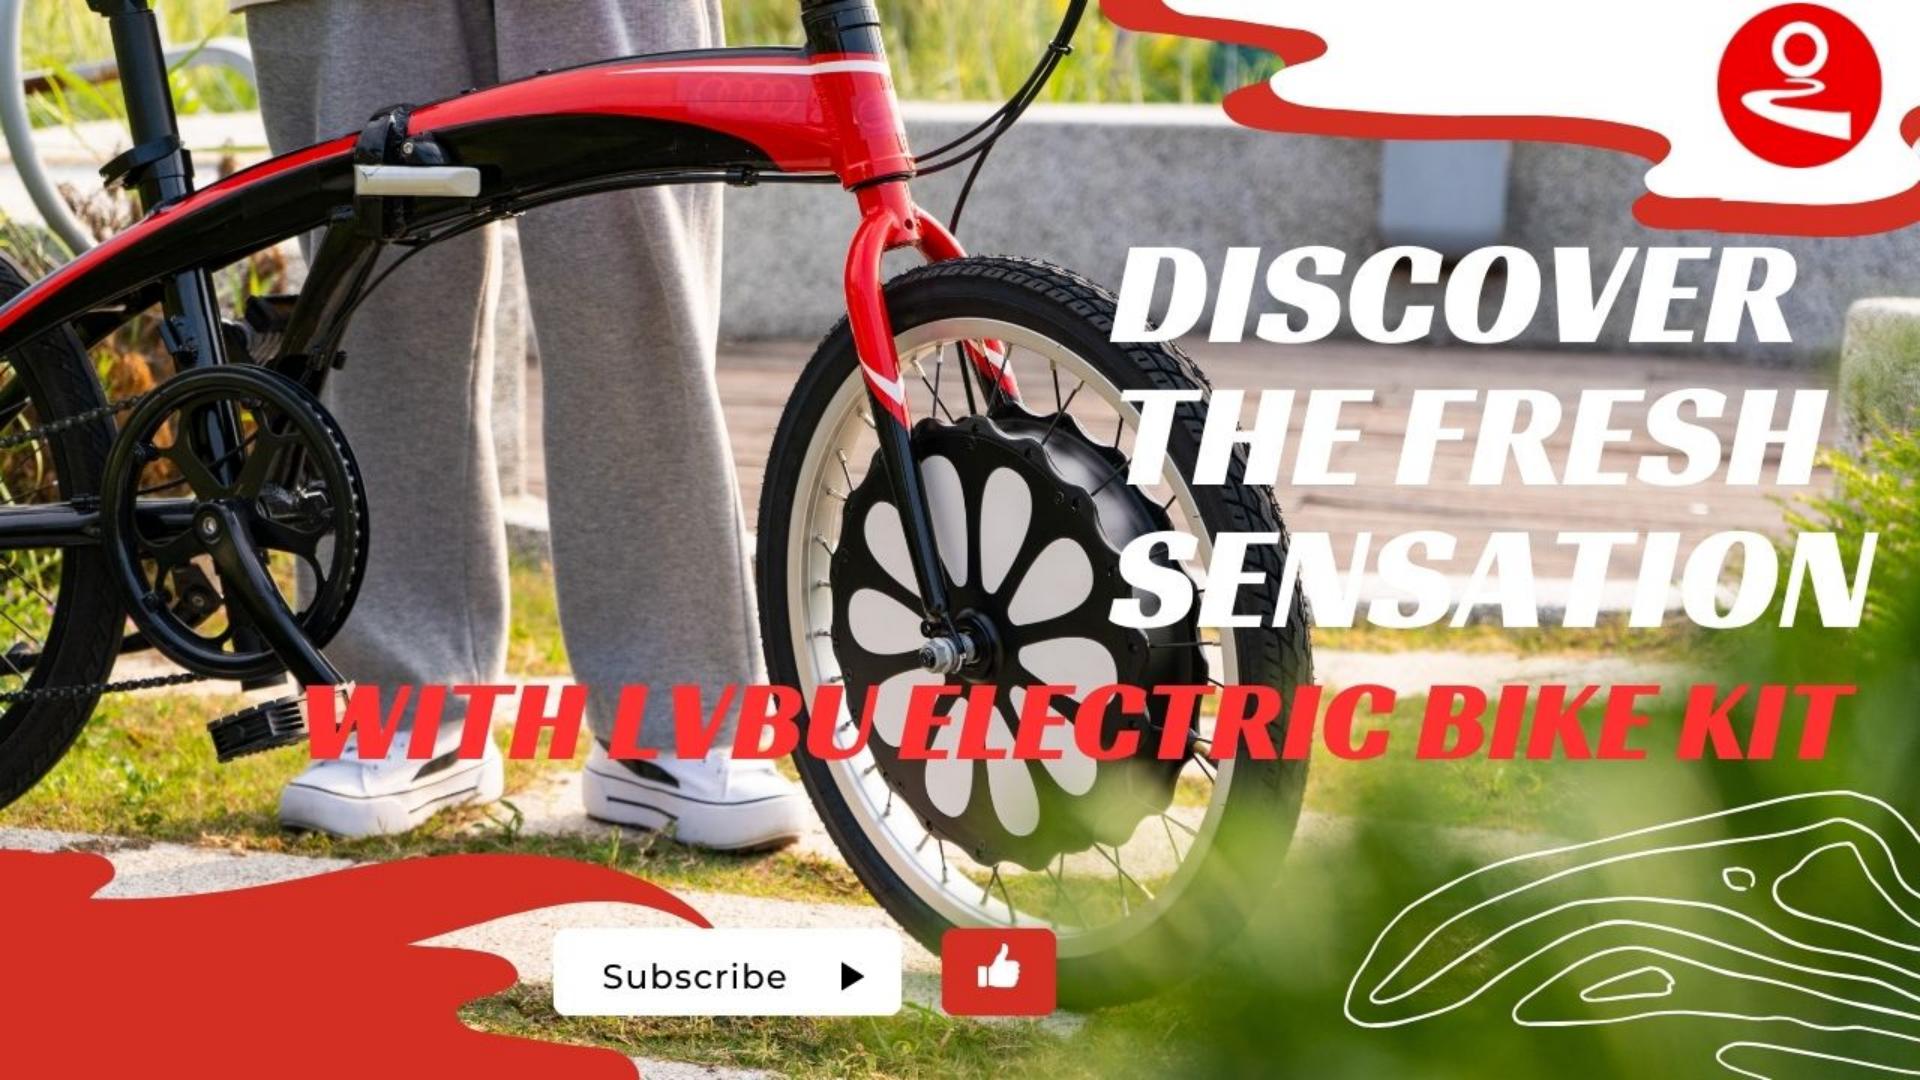 Discover the Fresh Sensation with LVBU Electric Bike Kit